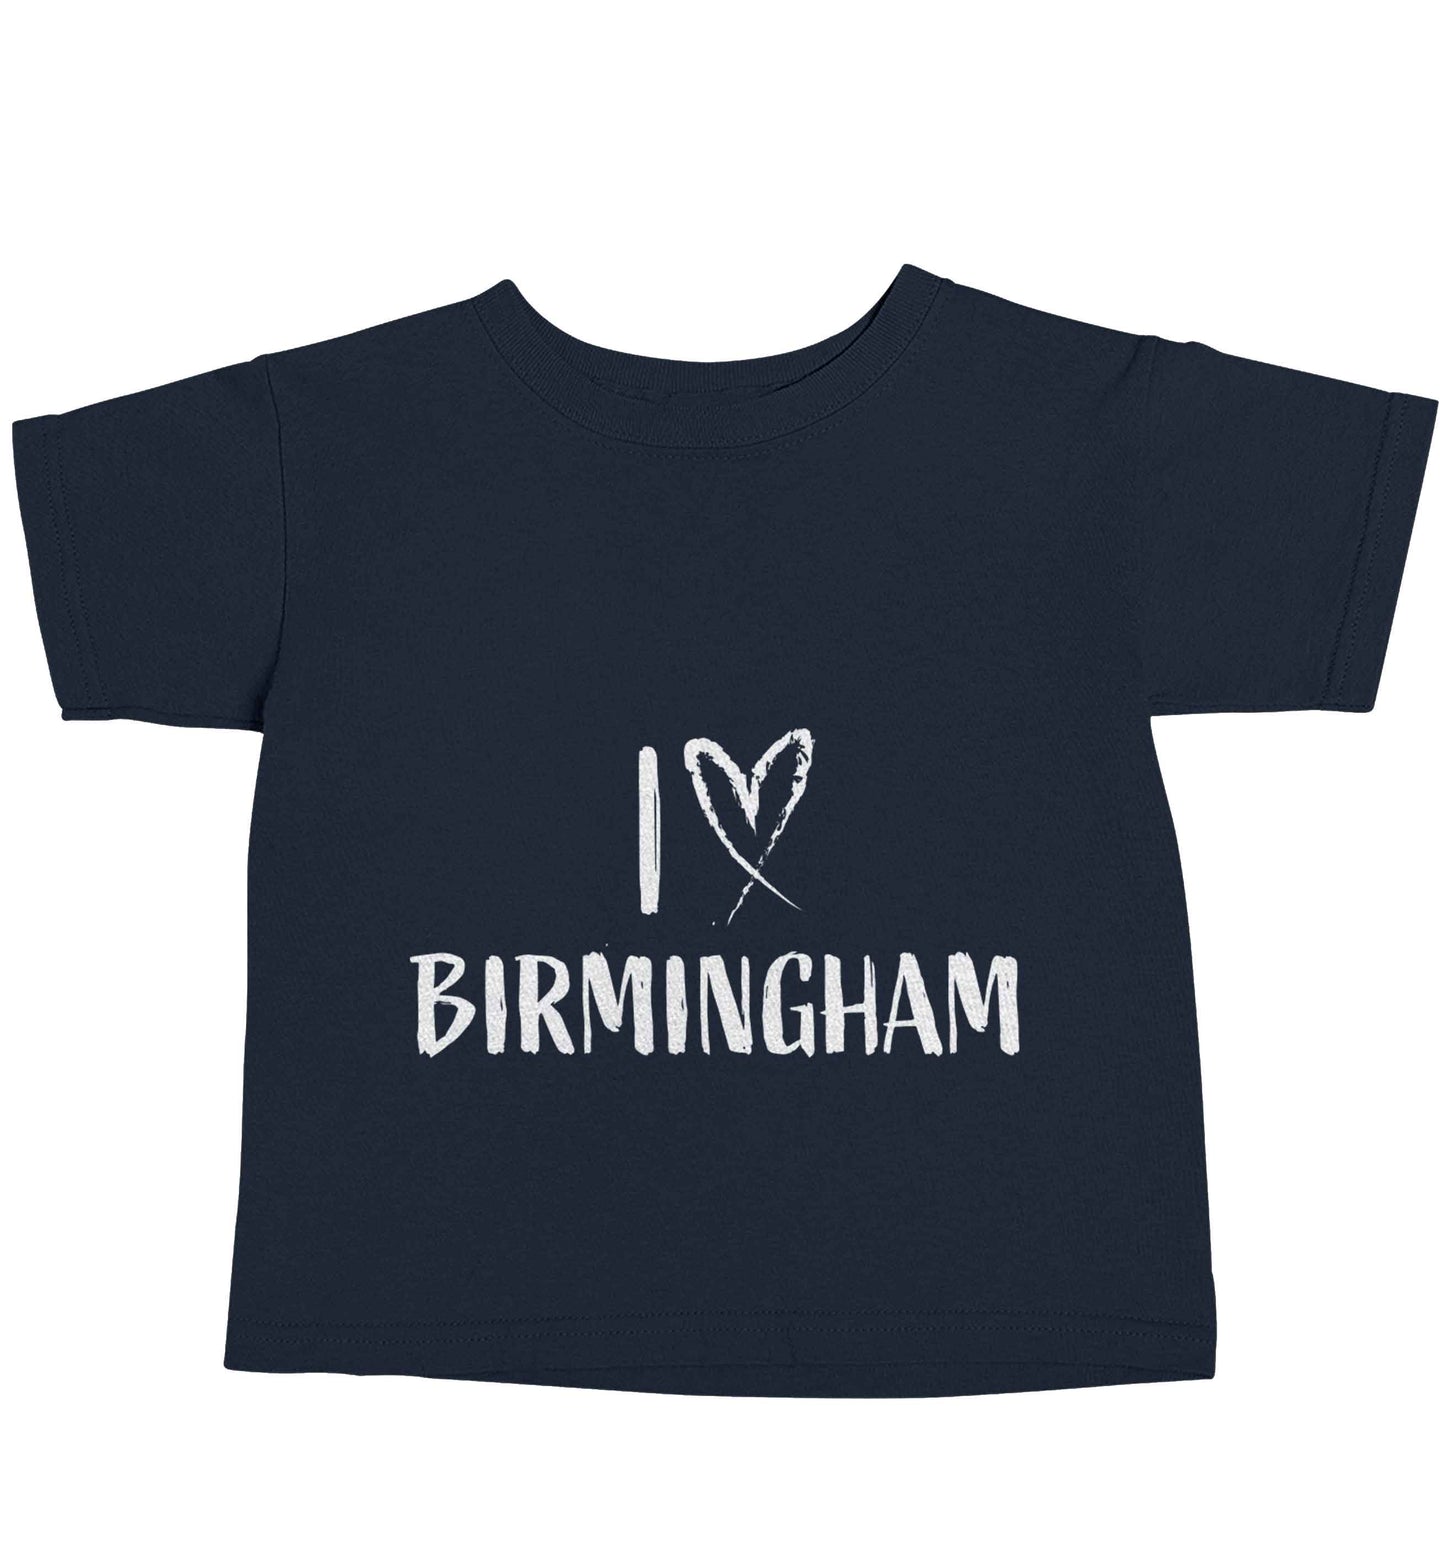 I love Birmingham navy baby toddler Tshirt 2 Years